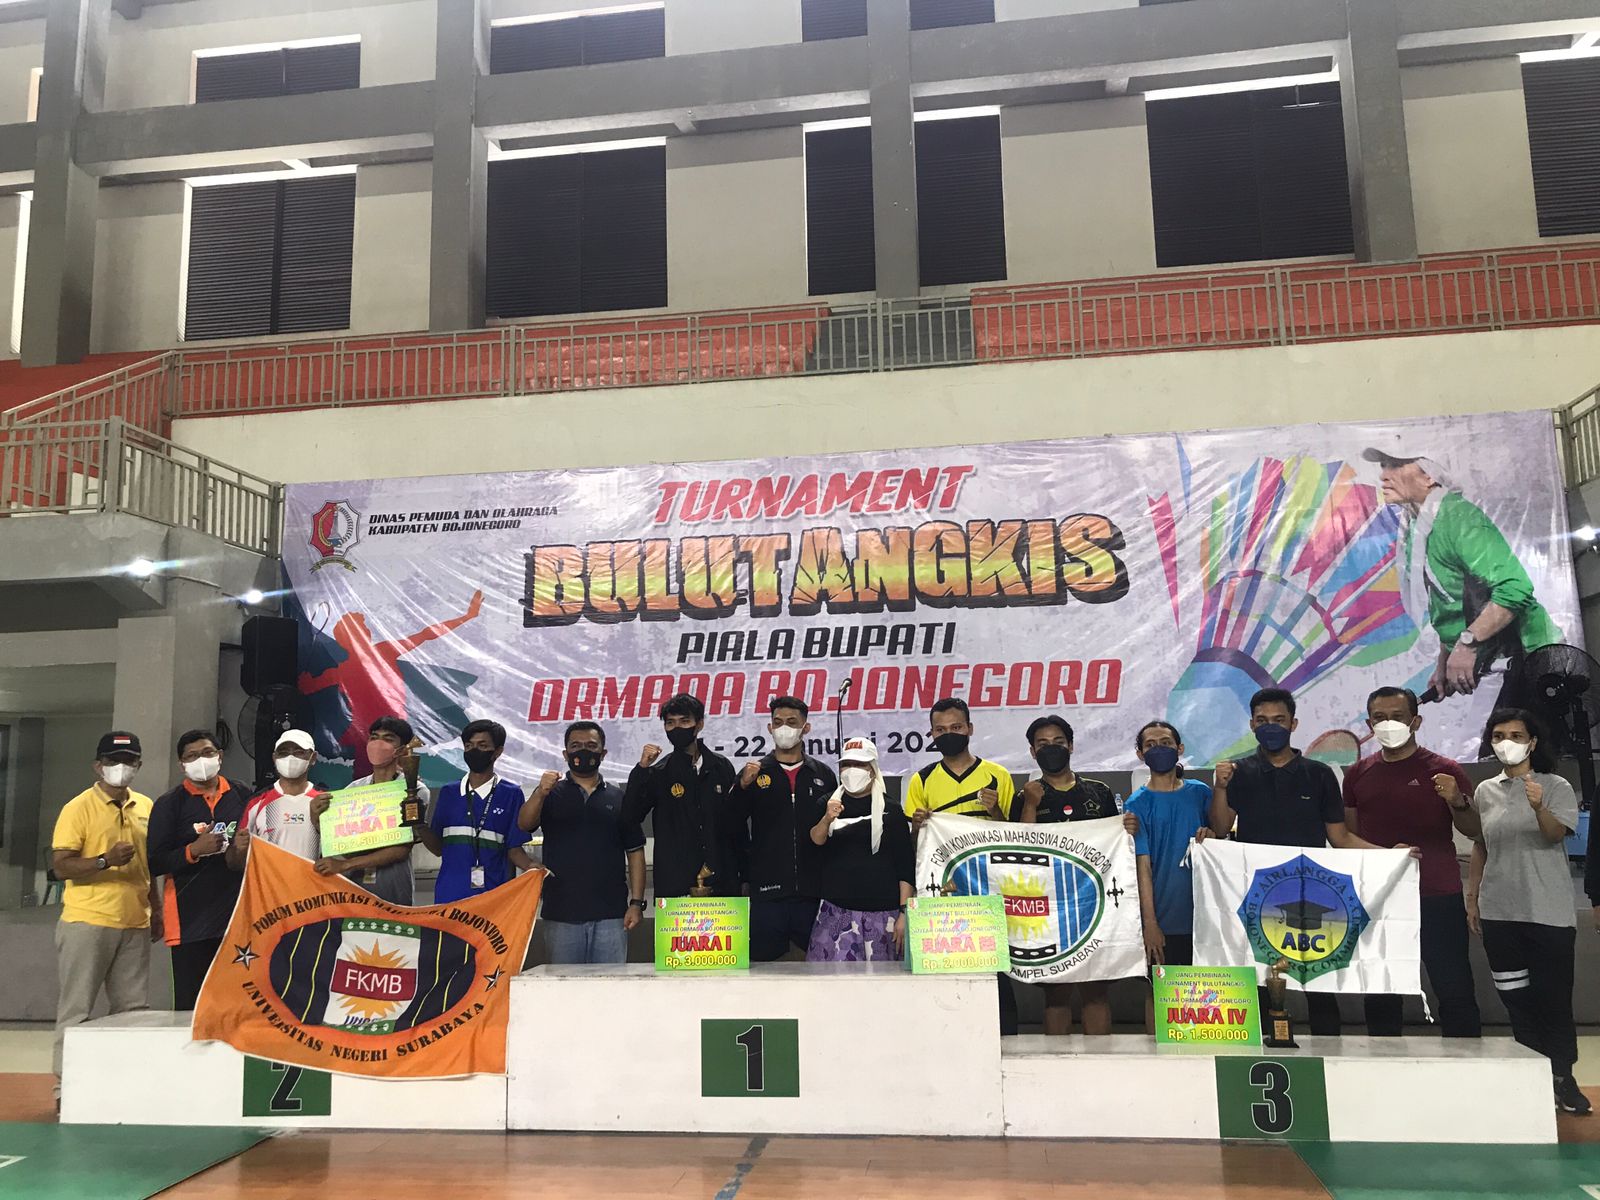 Inilah Juara Turnamen Bulu Tangkis Piala Bupati Ormada Bojonegoro